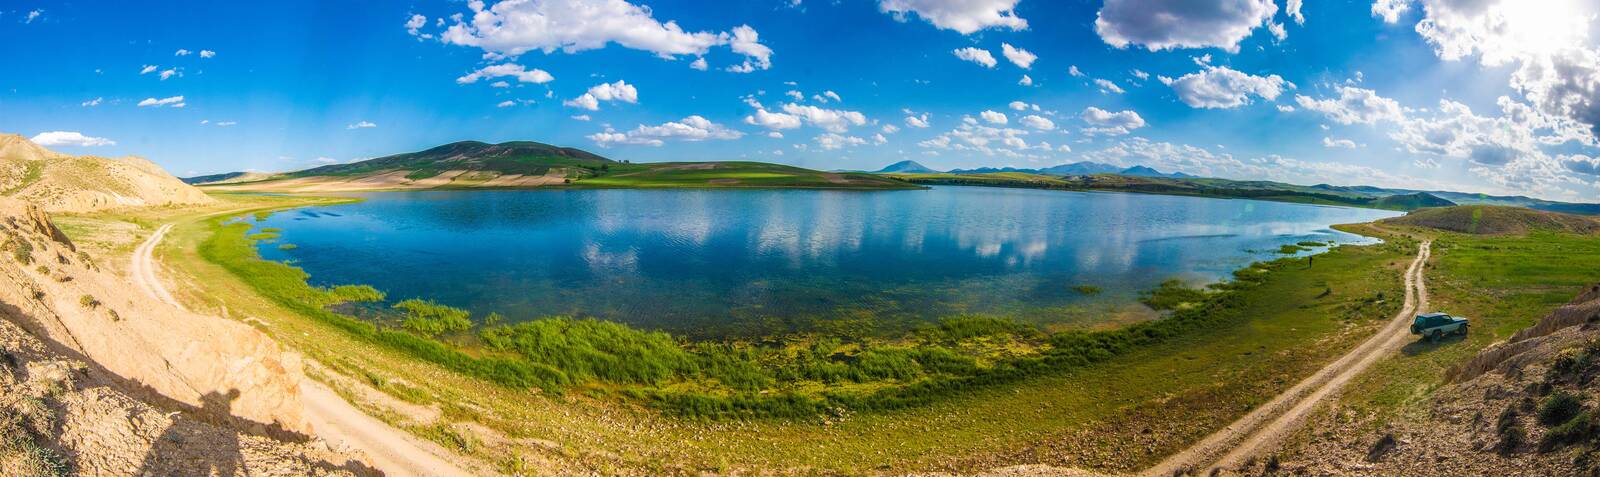 Lake Quri-gol